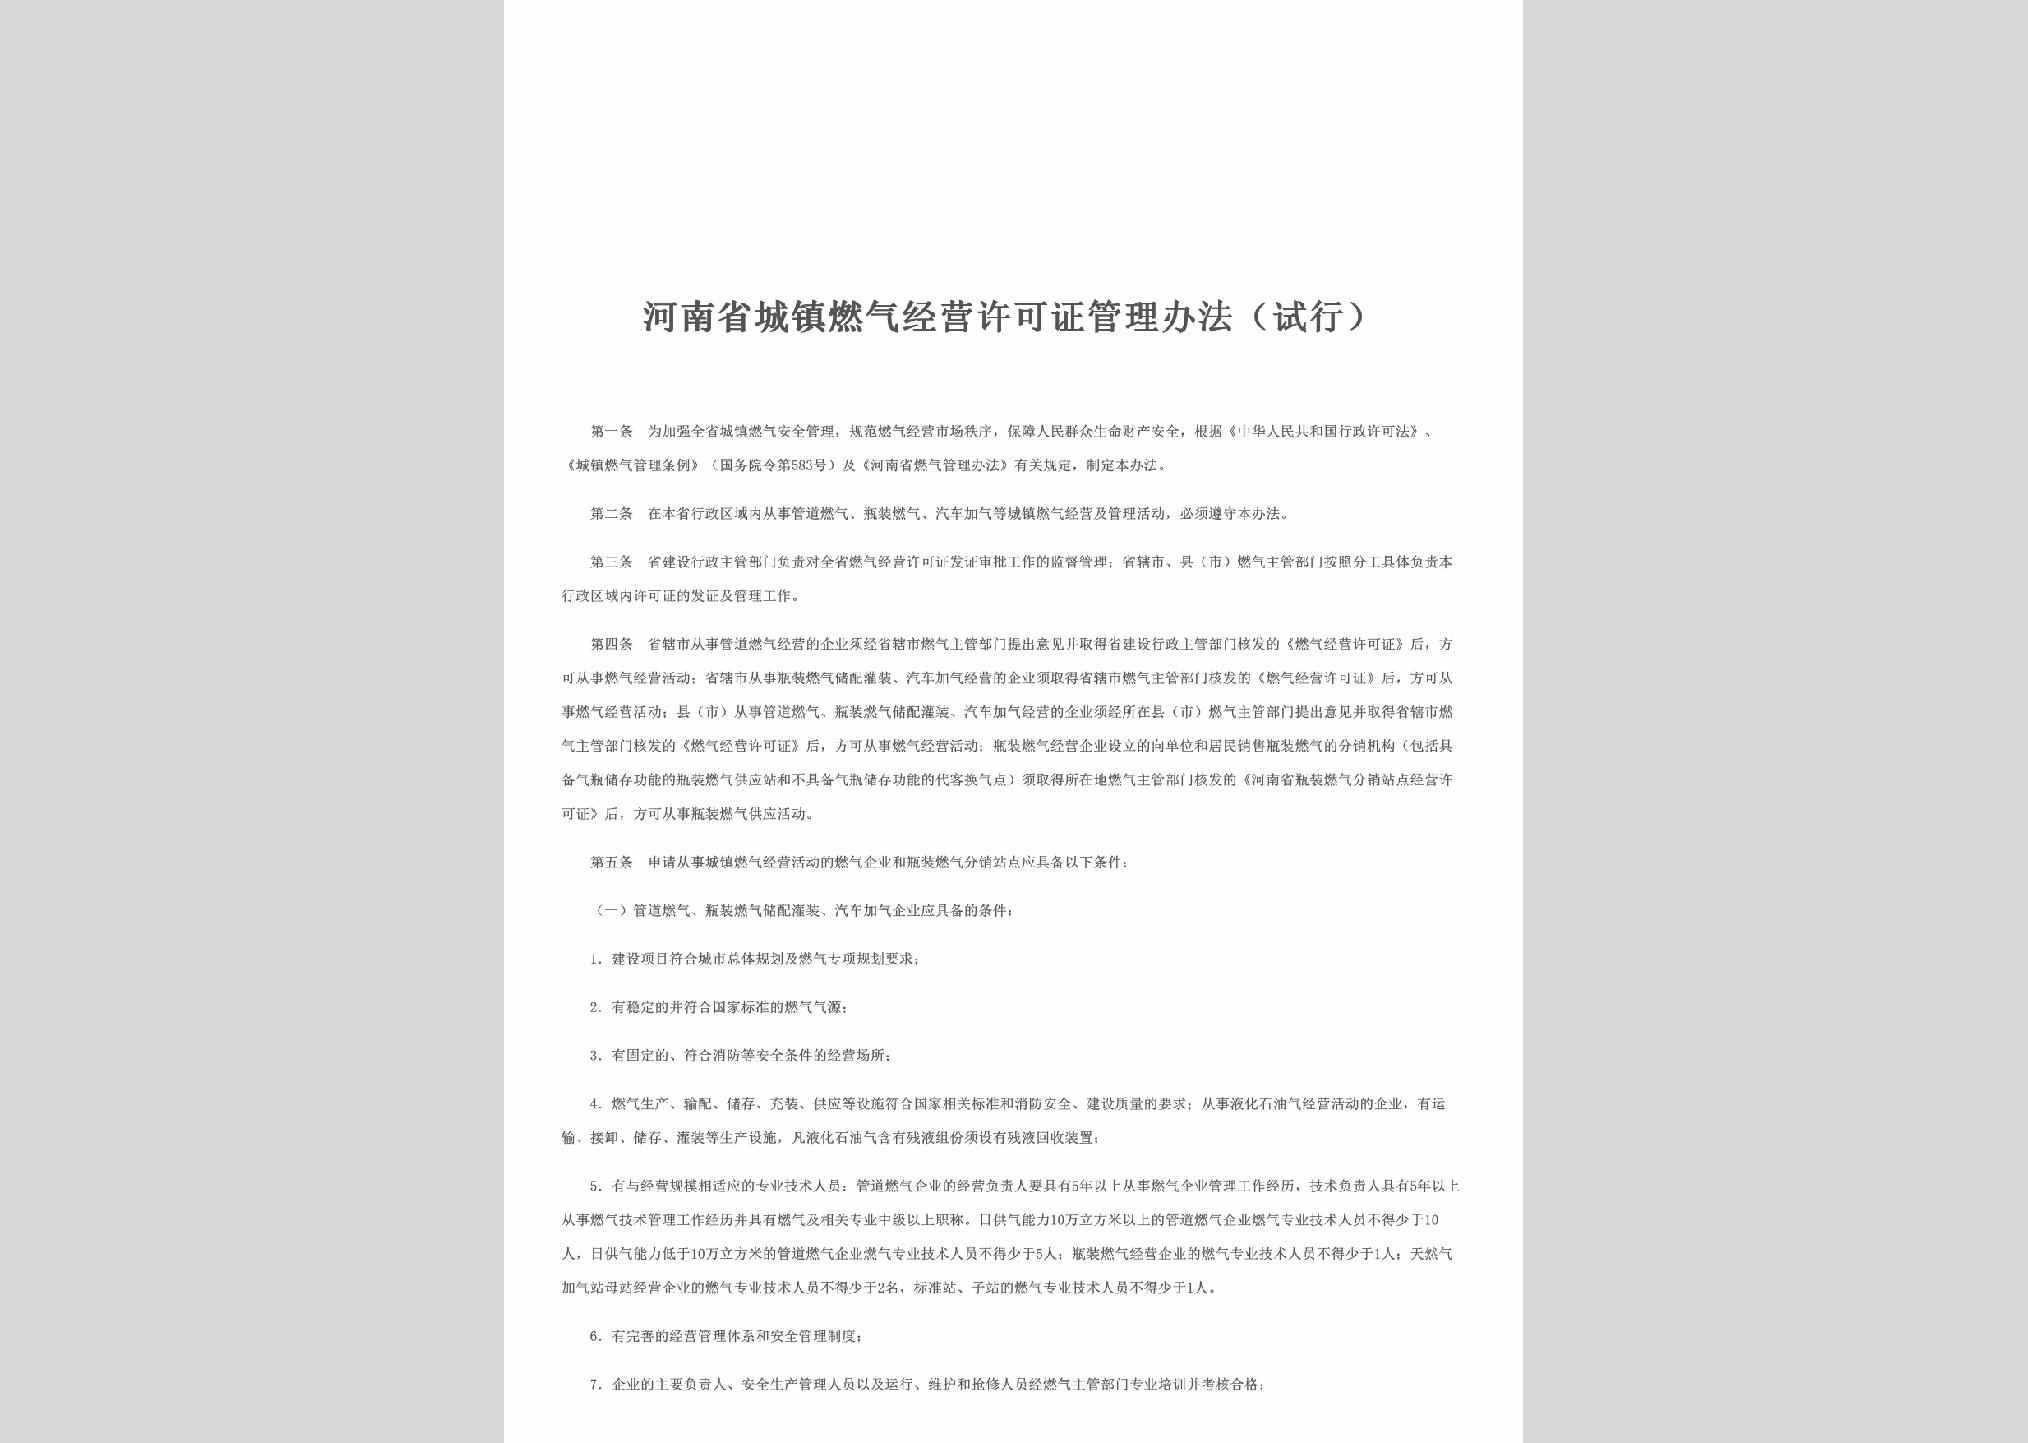 HEN-CZRQGLBF-2011：河南省城镇燃气经营许可证管理办法(试行)